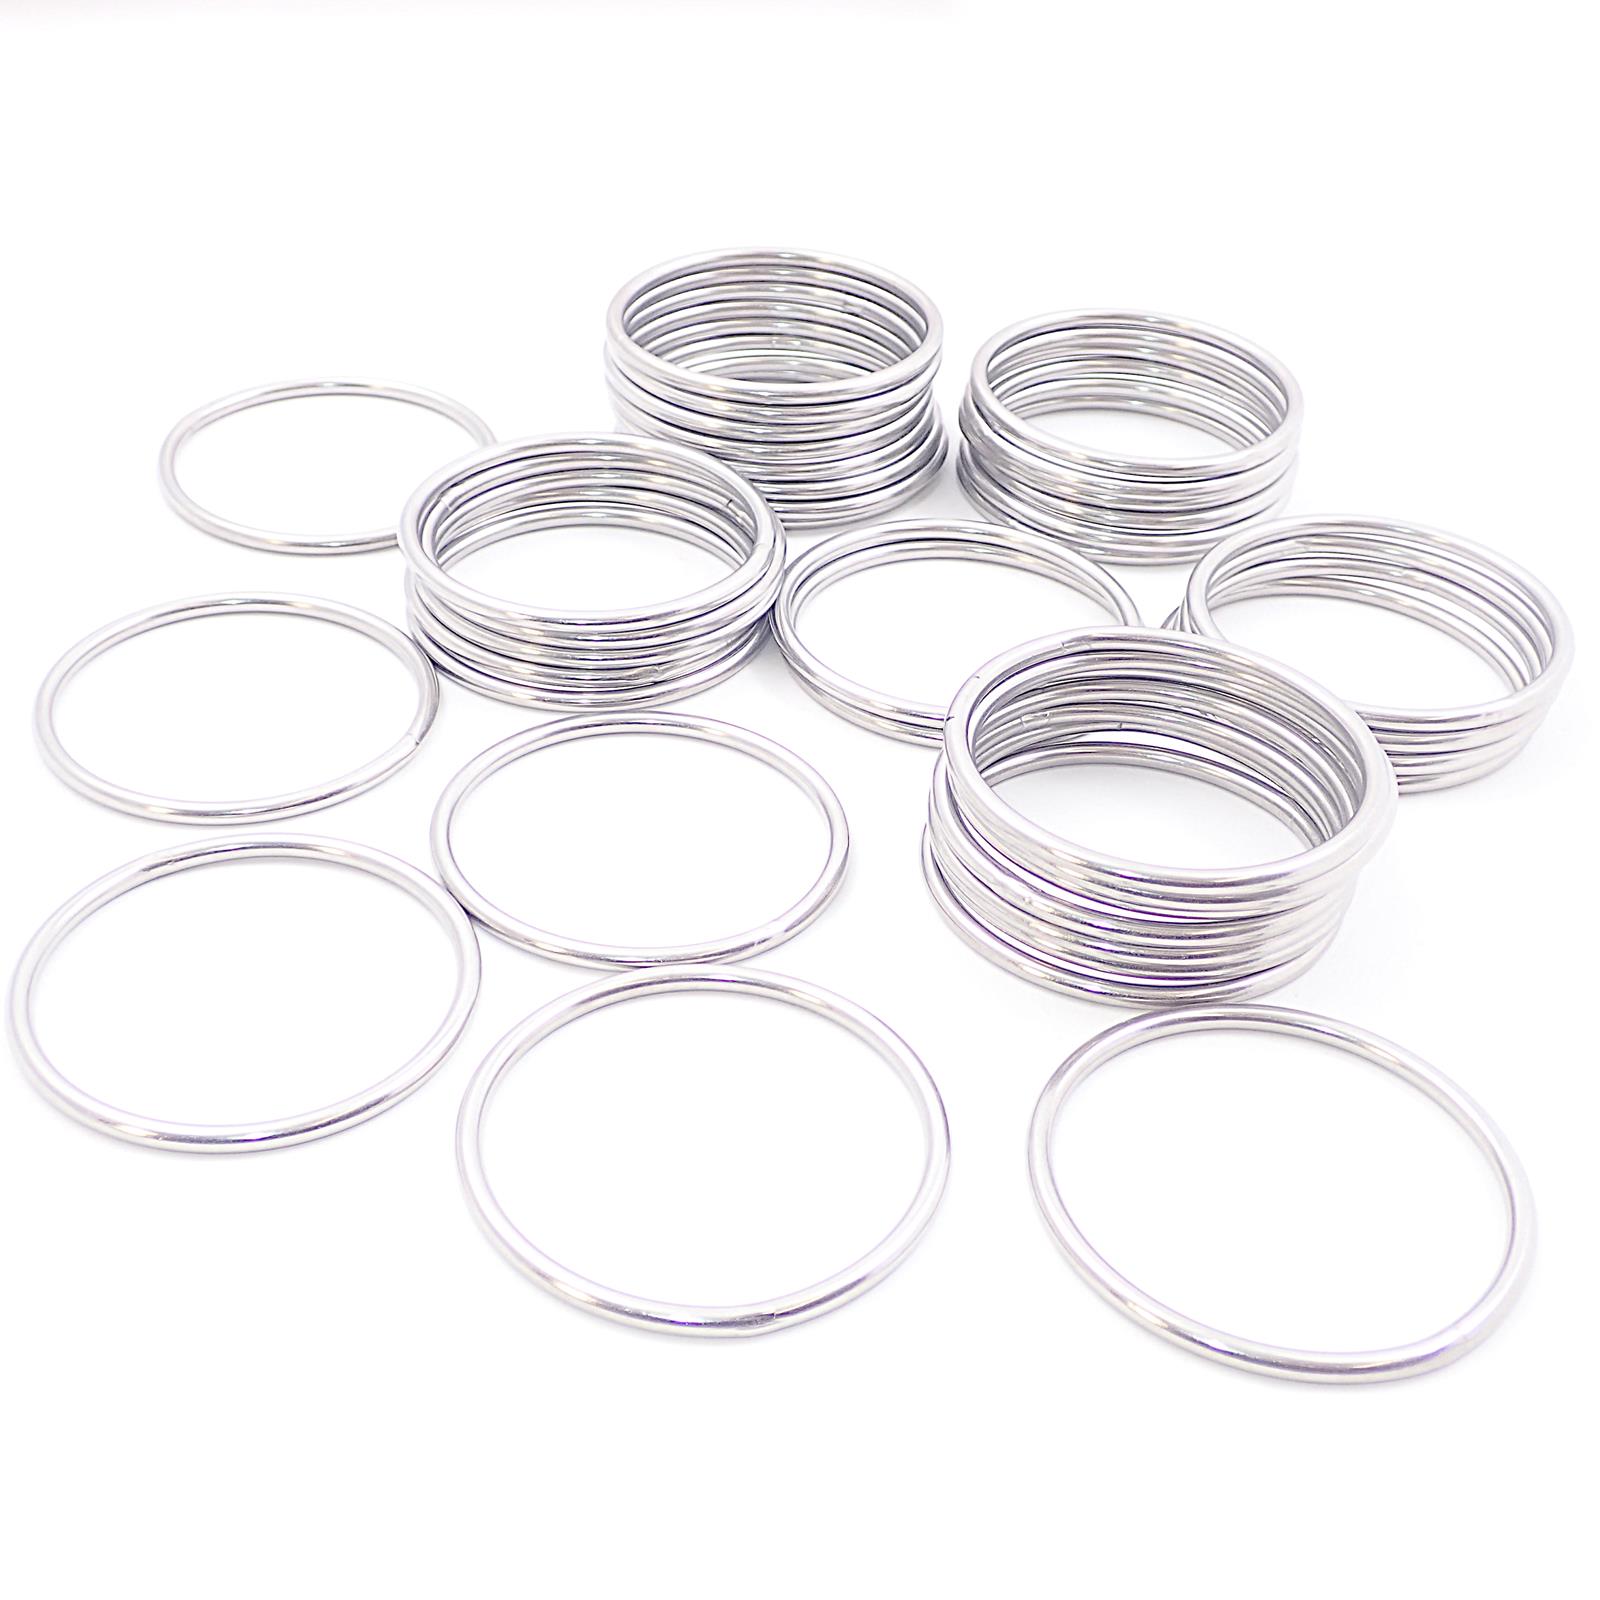 Material: Stainless Steel Metal O Rings, For Industrial, Packaging